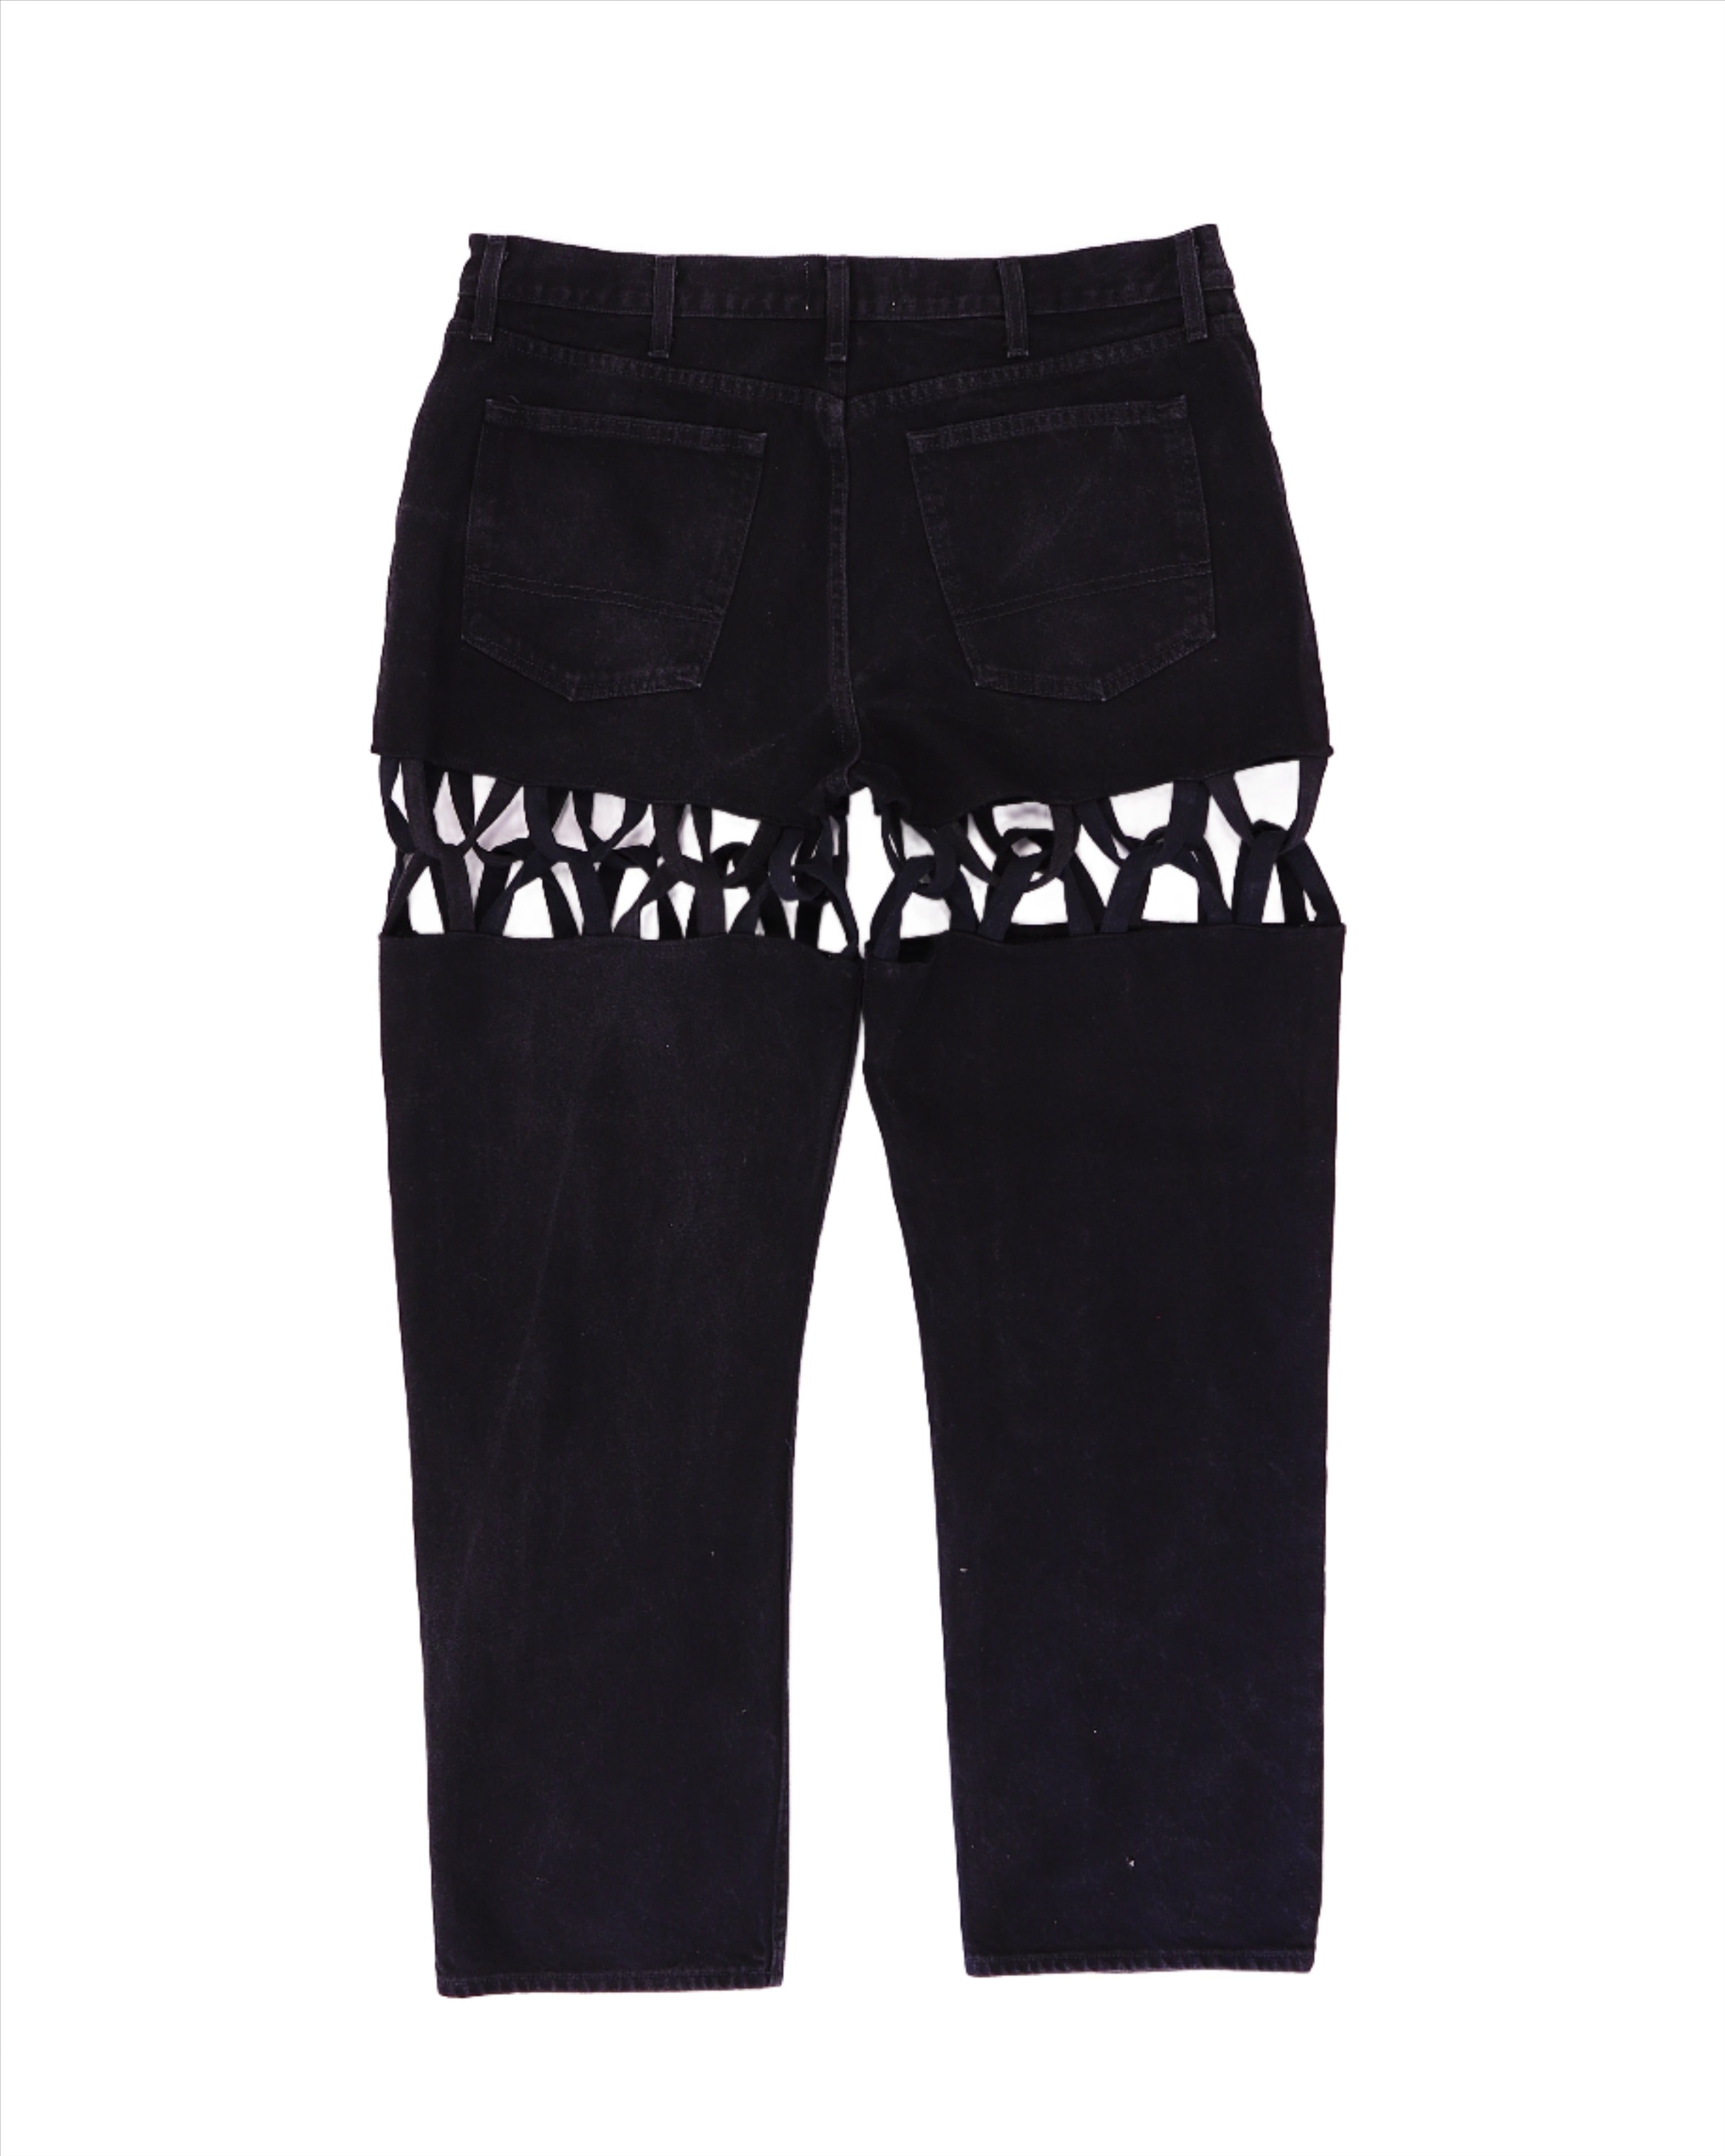 Criss Cross Jeans Black (size 18)